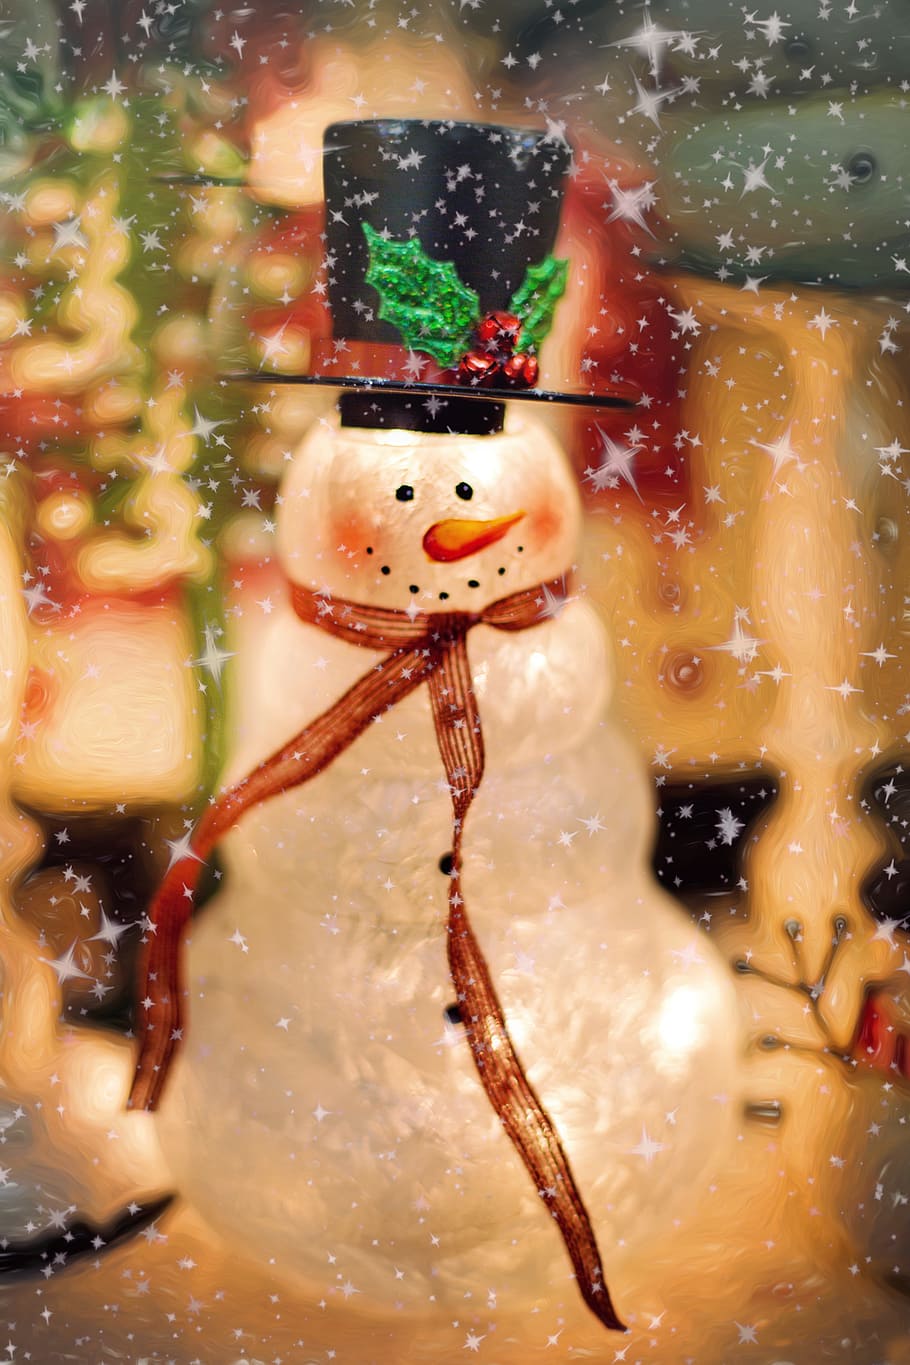 snowman figurine, snowman, christmas, winter, xmas, holiday, celebration, snow, decoration, glowing